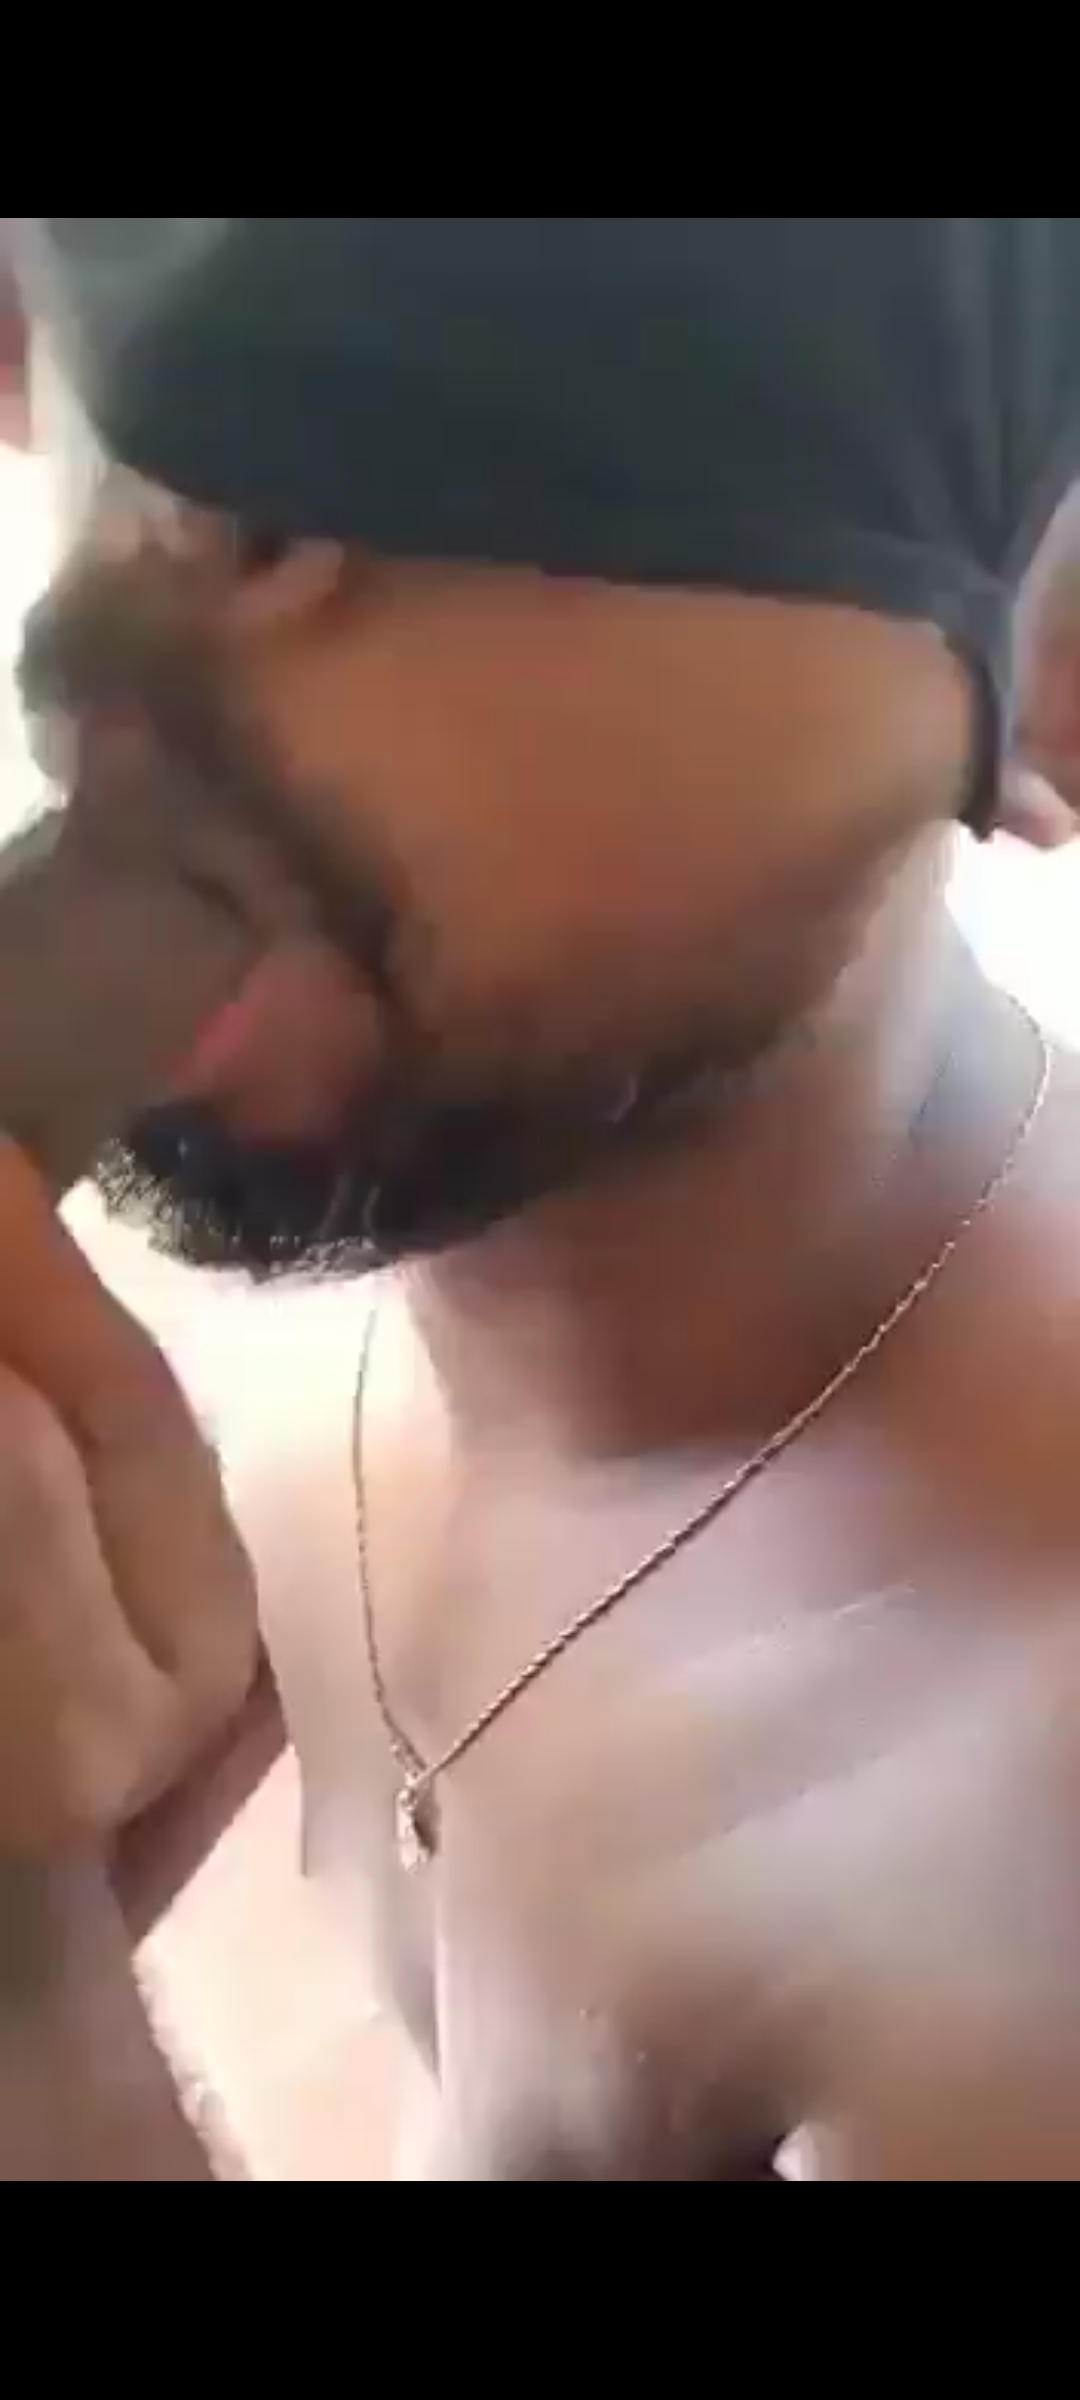 Tamil gay blowjob his friend in public bathroom